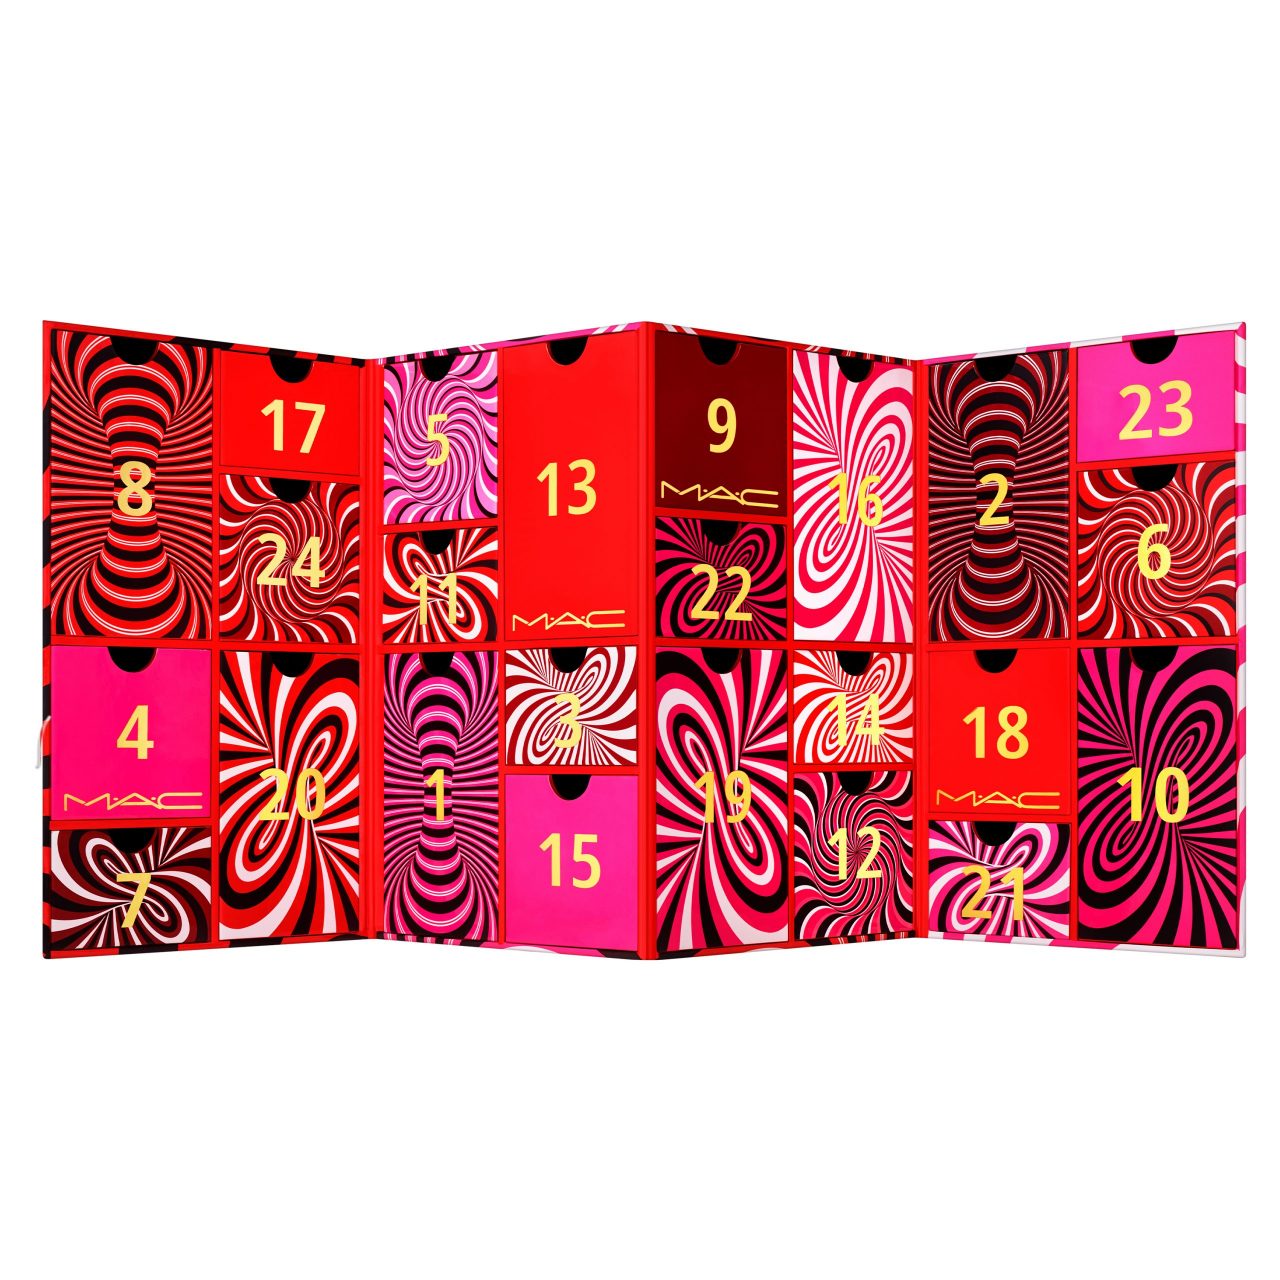 Before #ChanelAdventCalendar, these were the buzziest Advent calendars